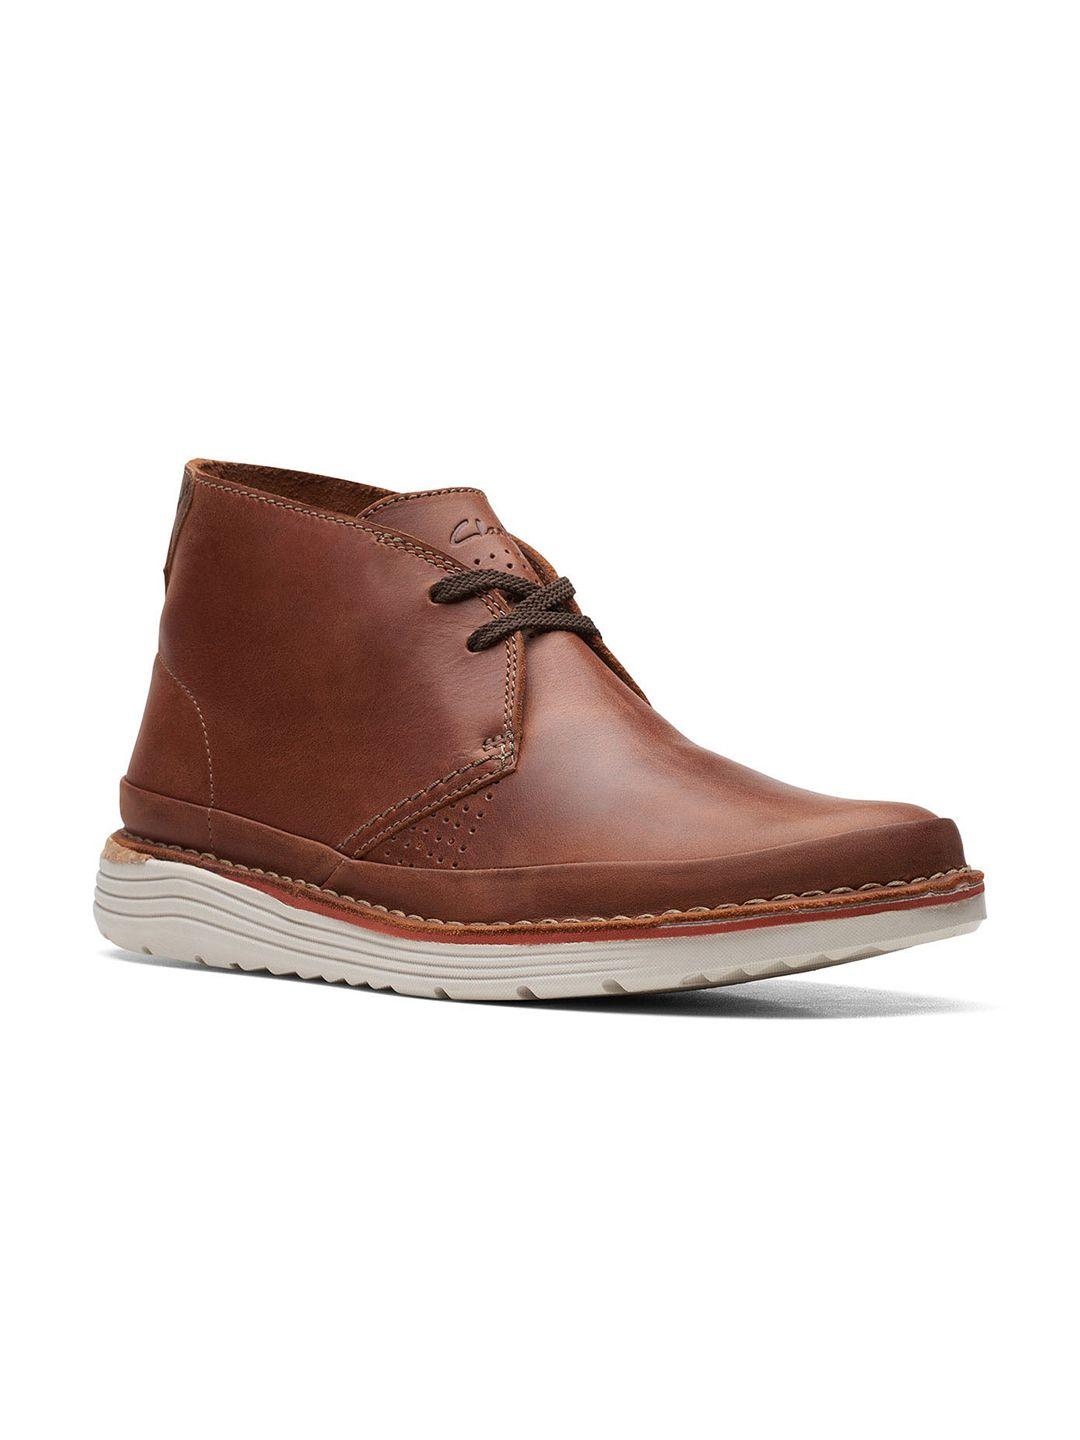 clarks-men-brown-solid-leather-regular-boots